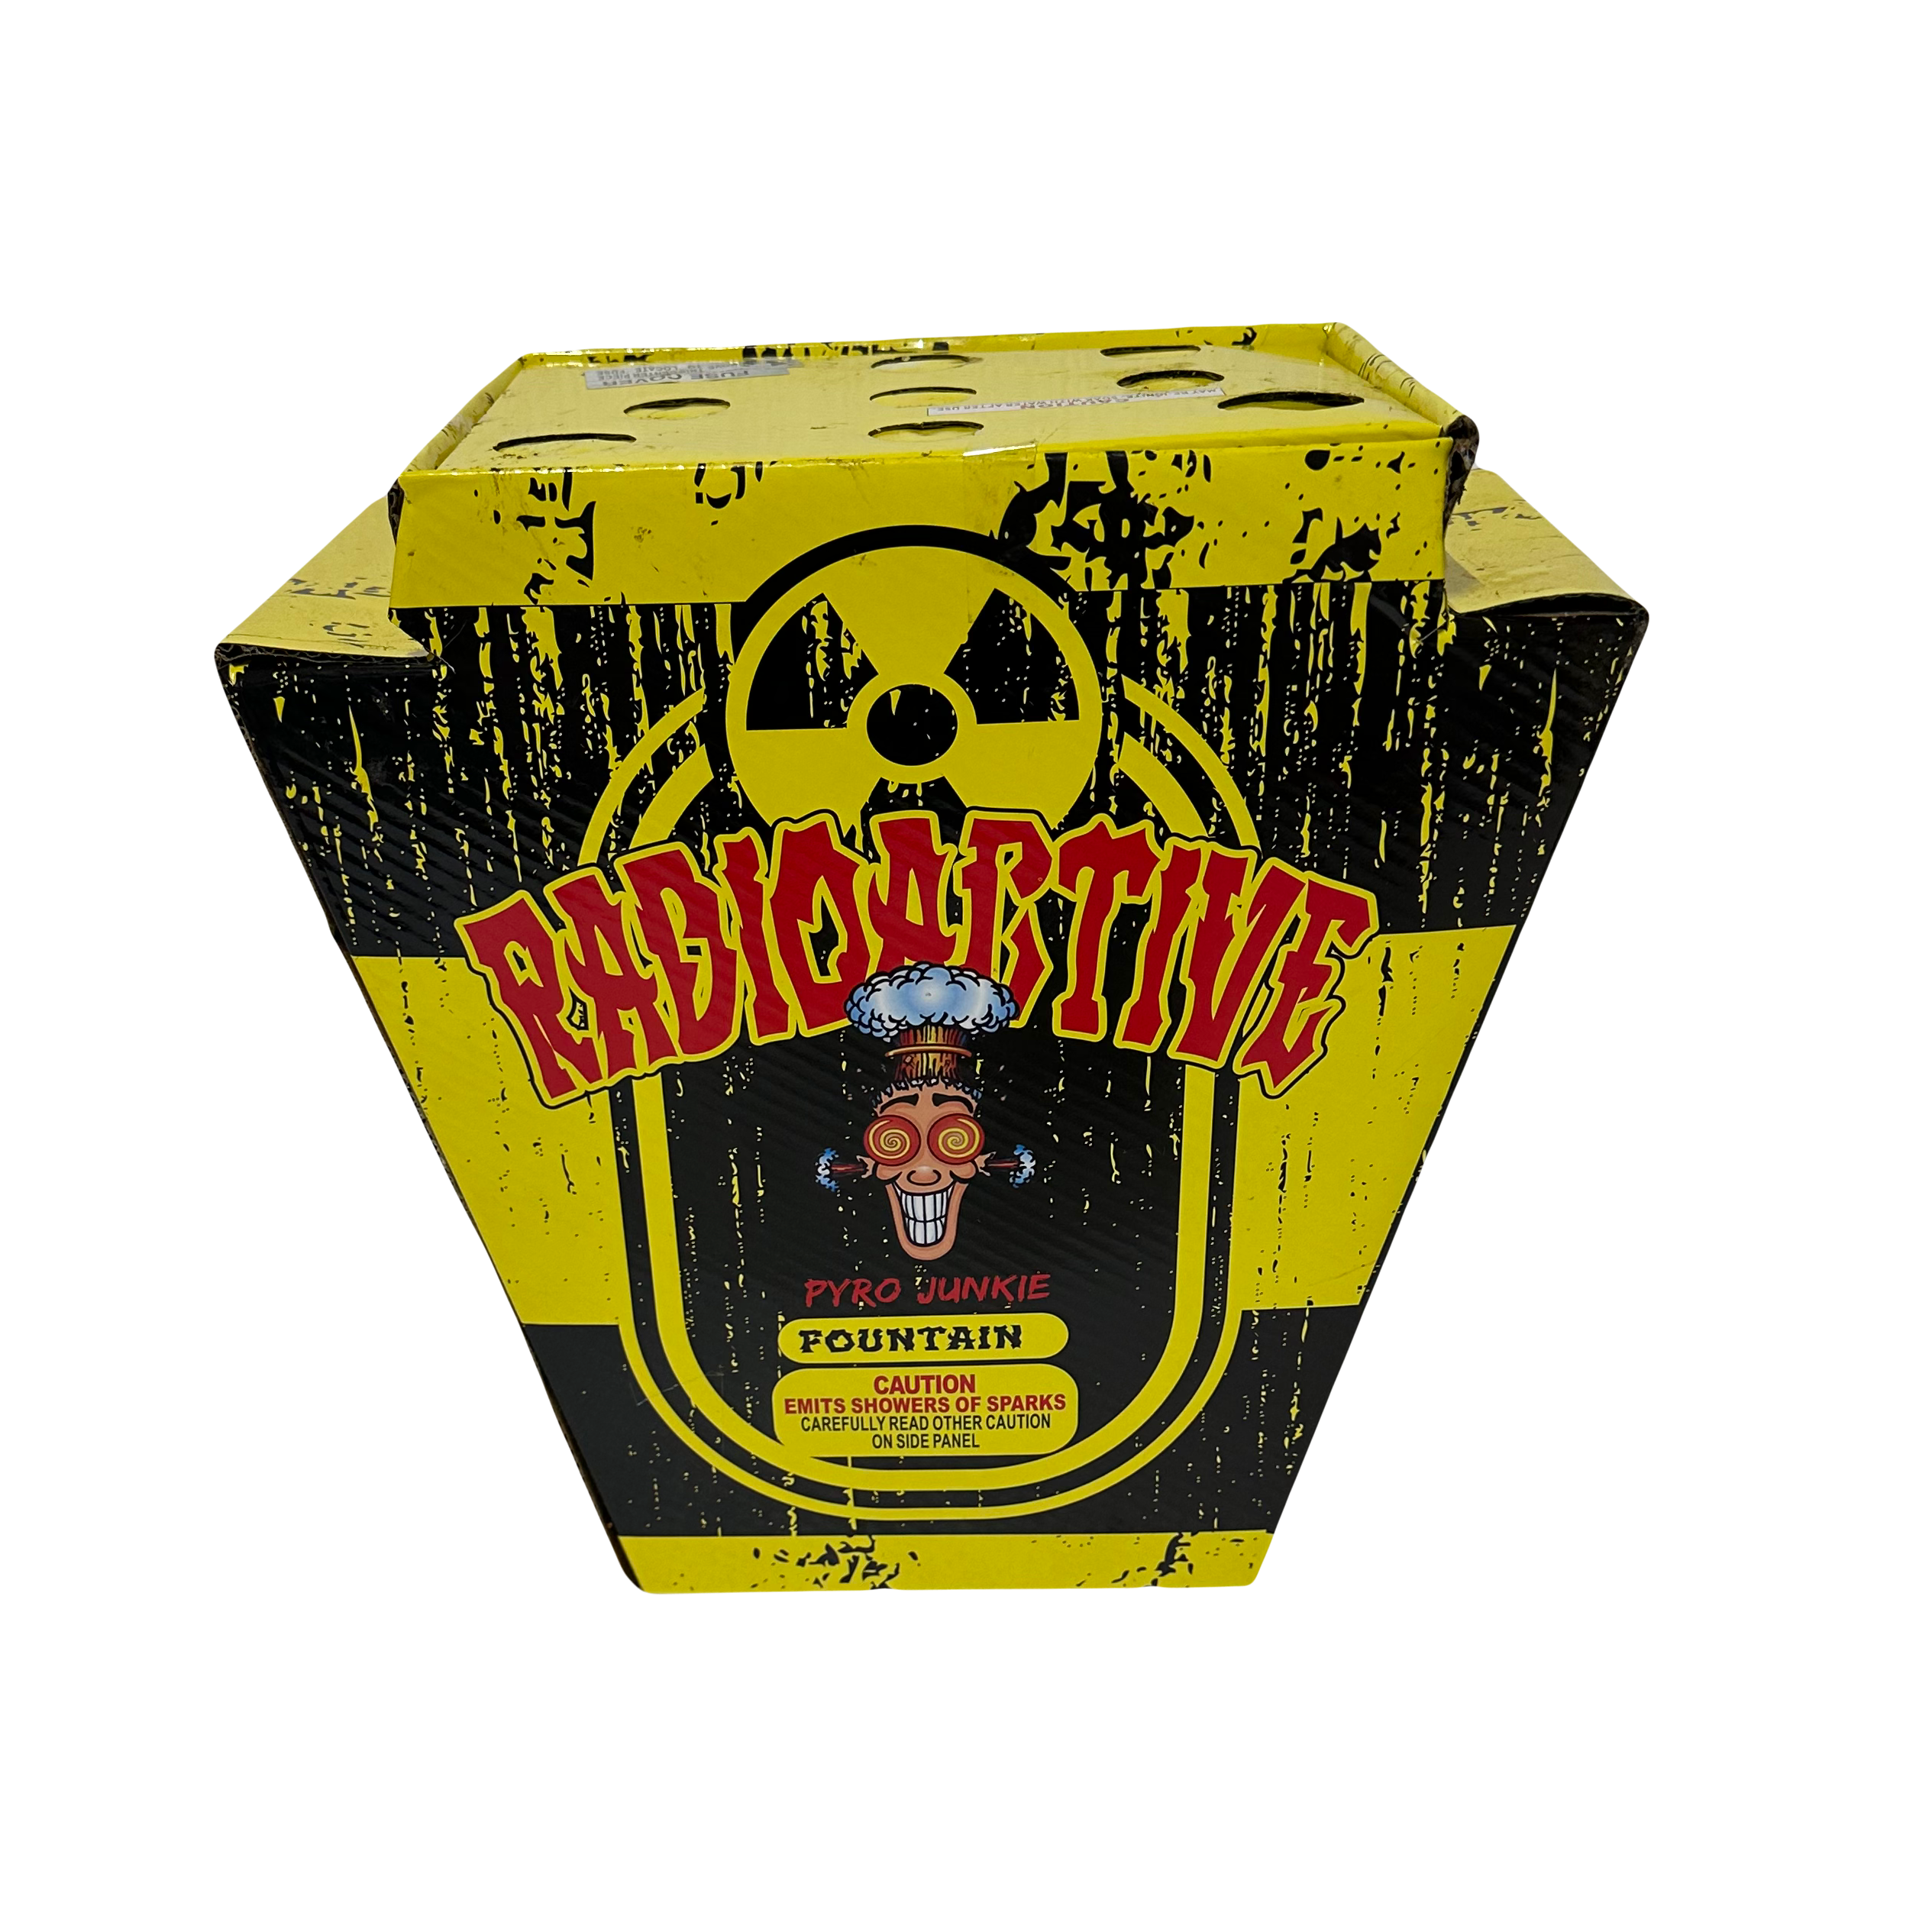 Radioactive By PJ (Case - 4 Units)